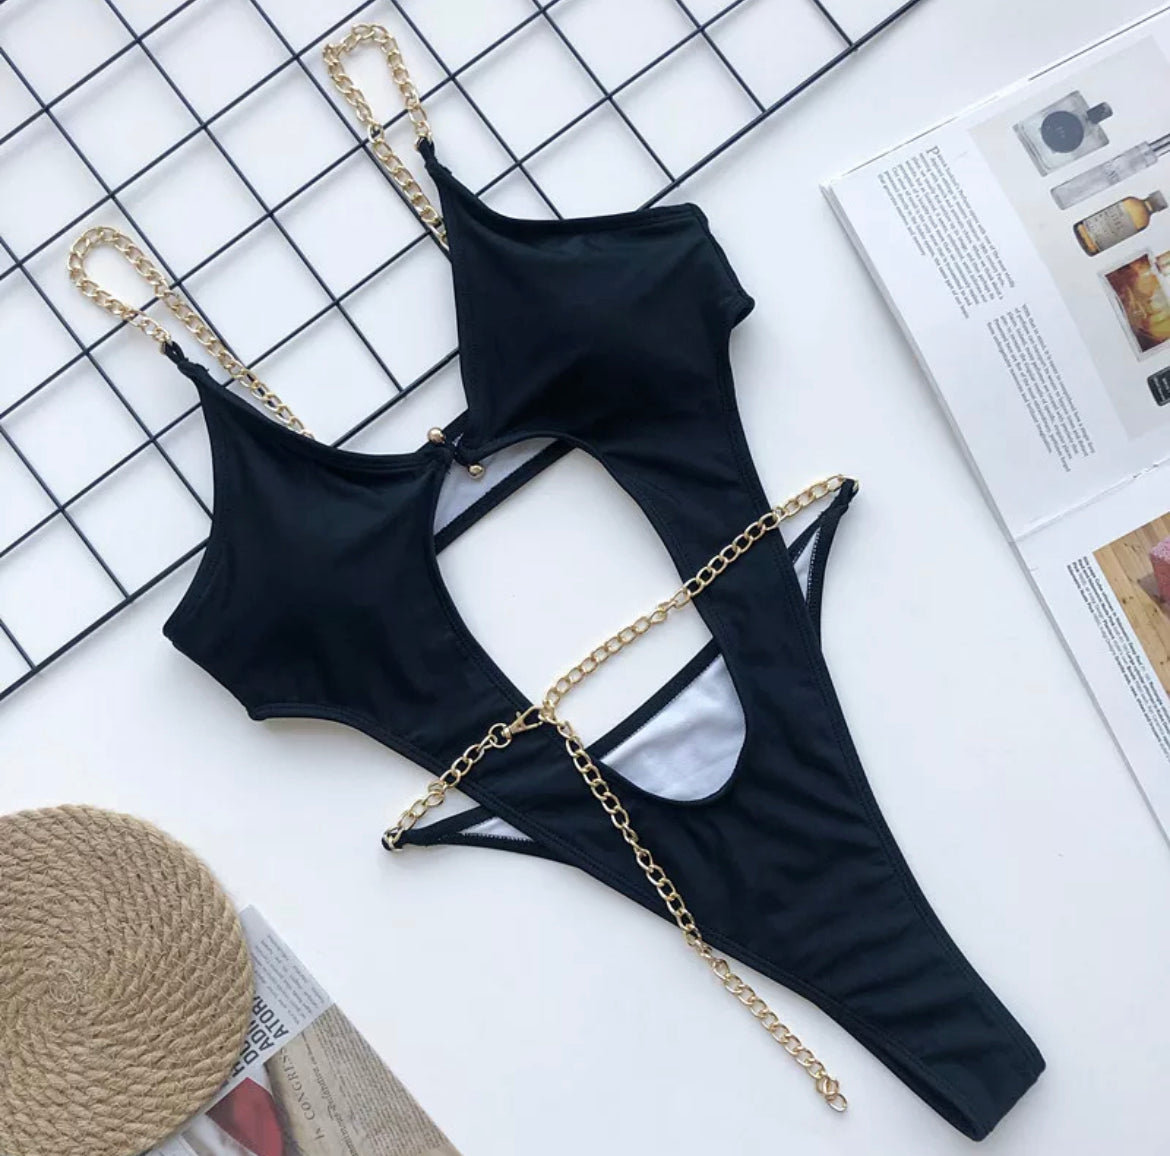 Black Bikini Swimsuit With Gold Chain Straps